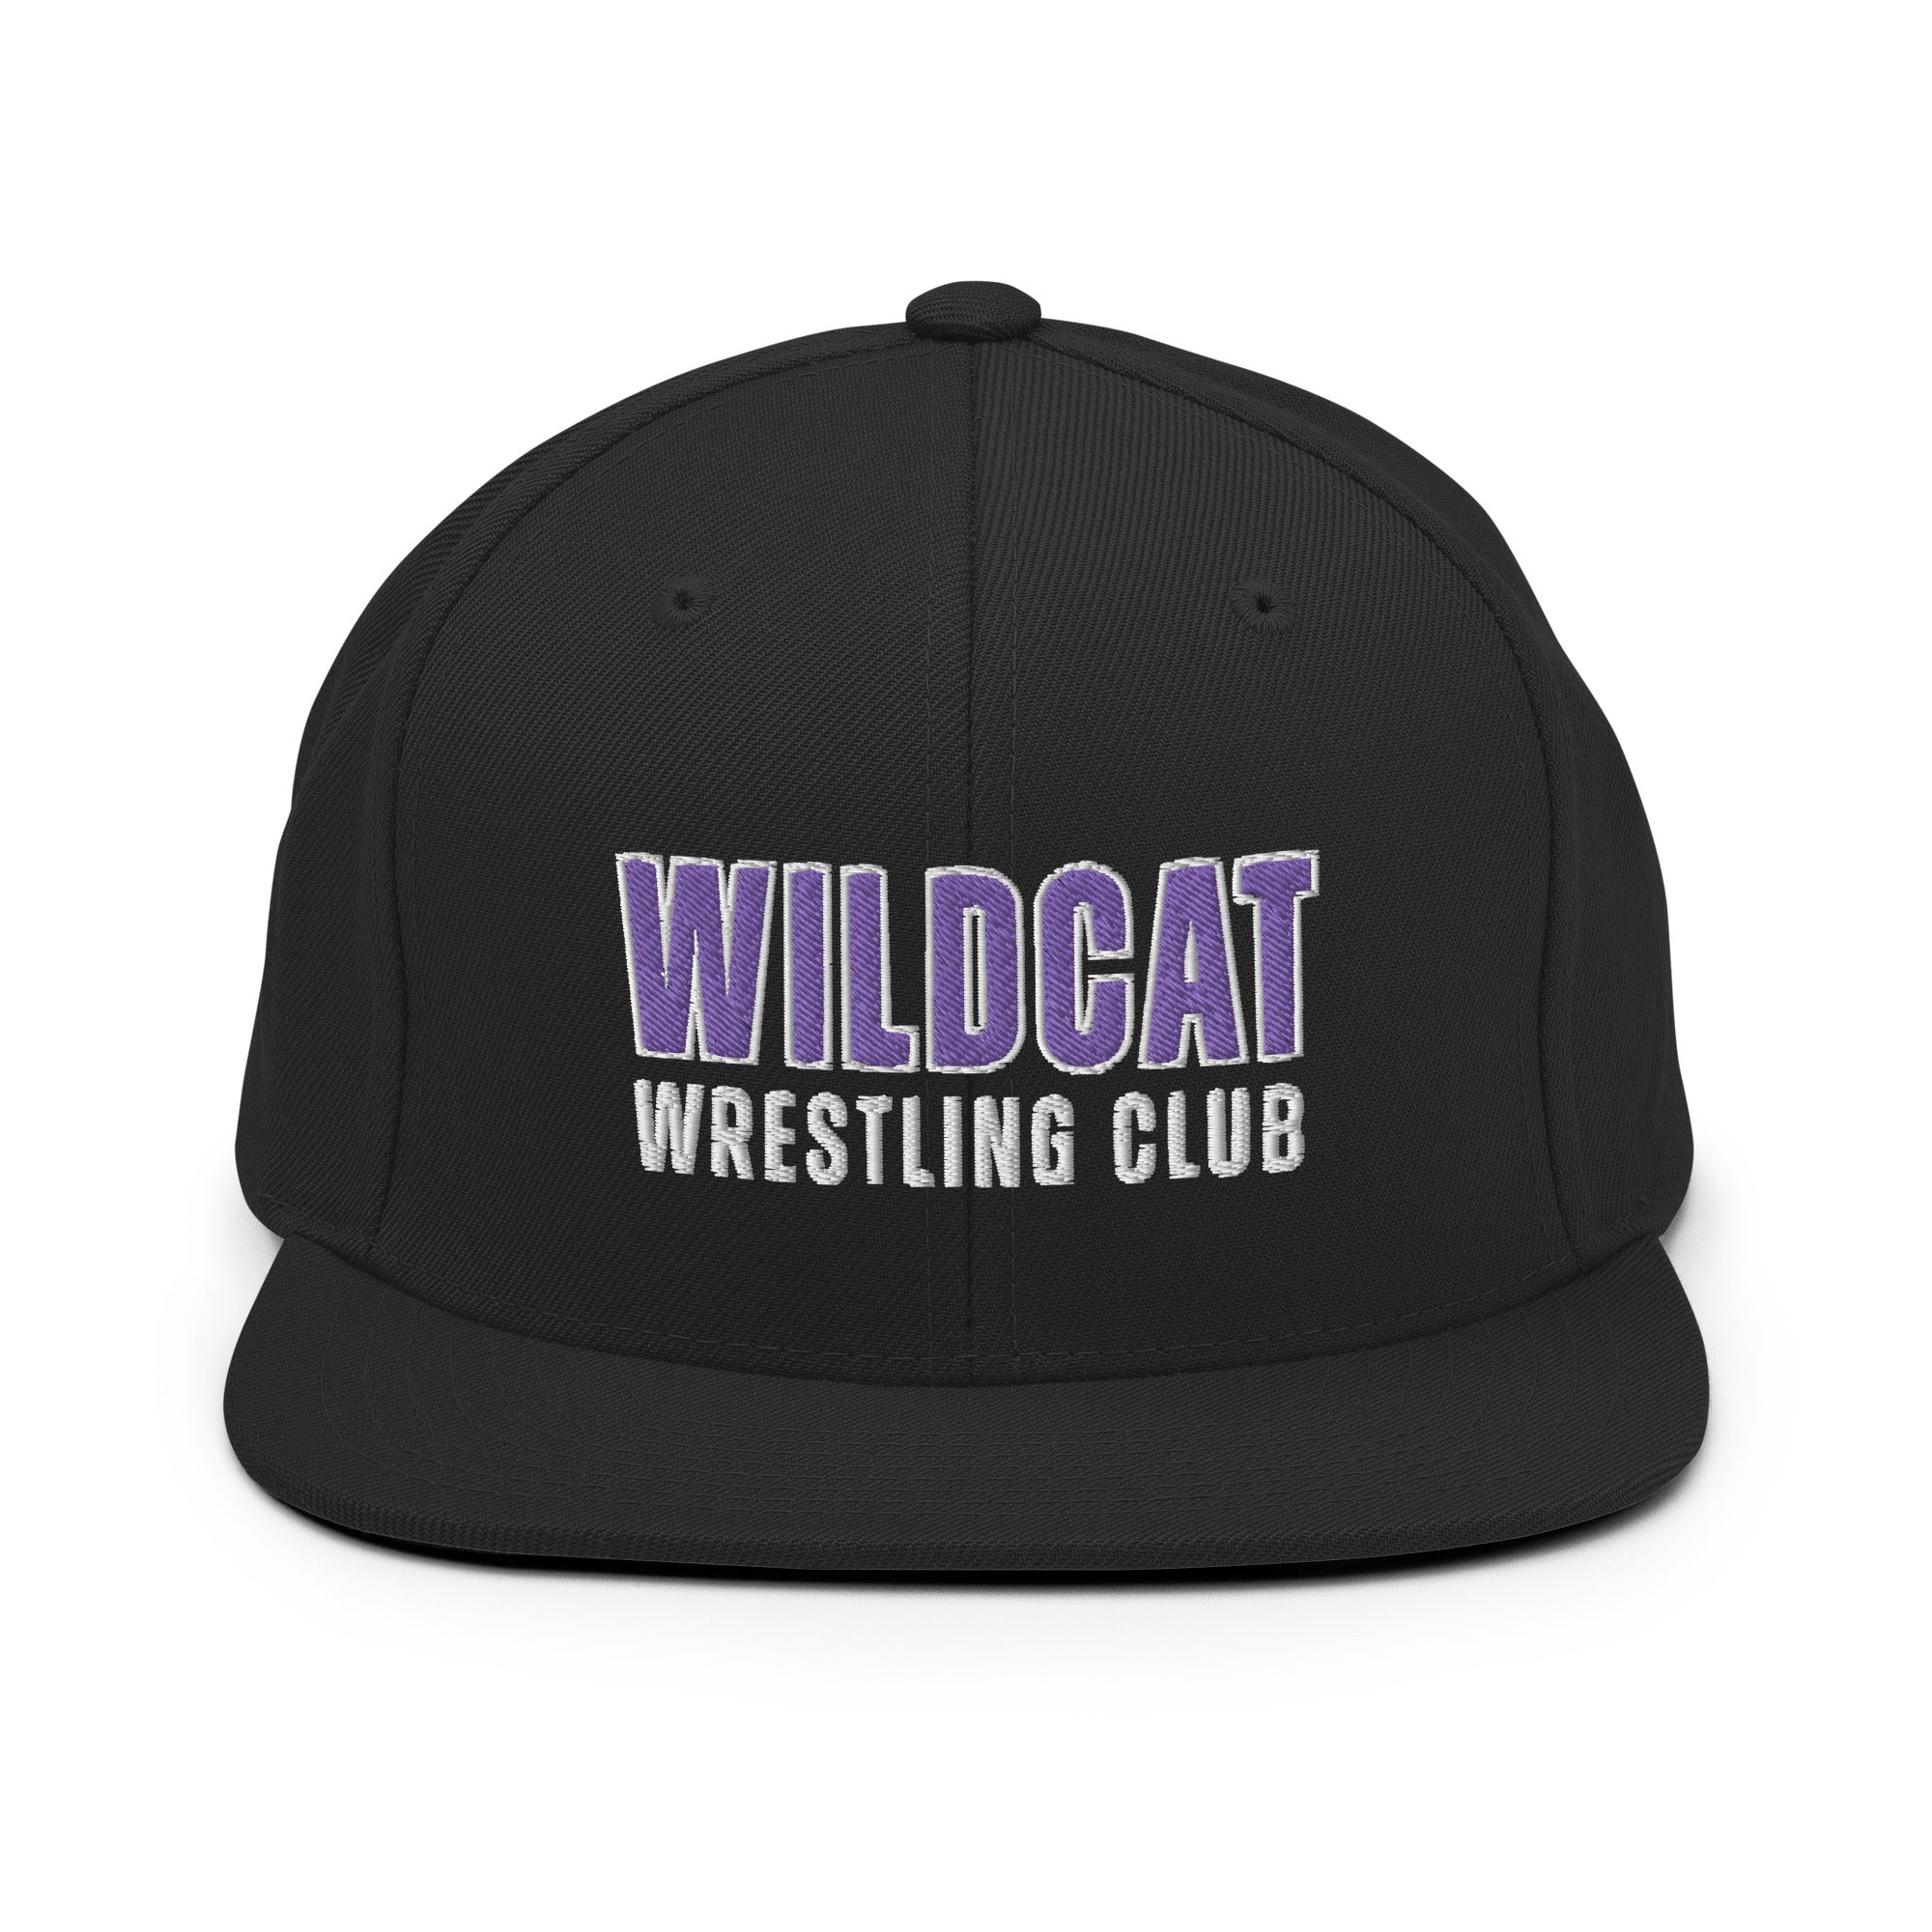 Wildcat Wrestling Club (Louisburg) Snapback Hat